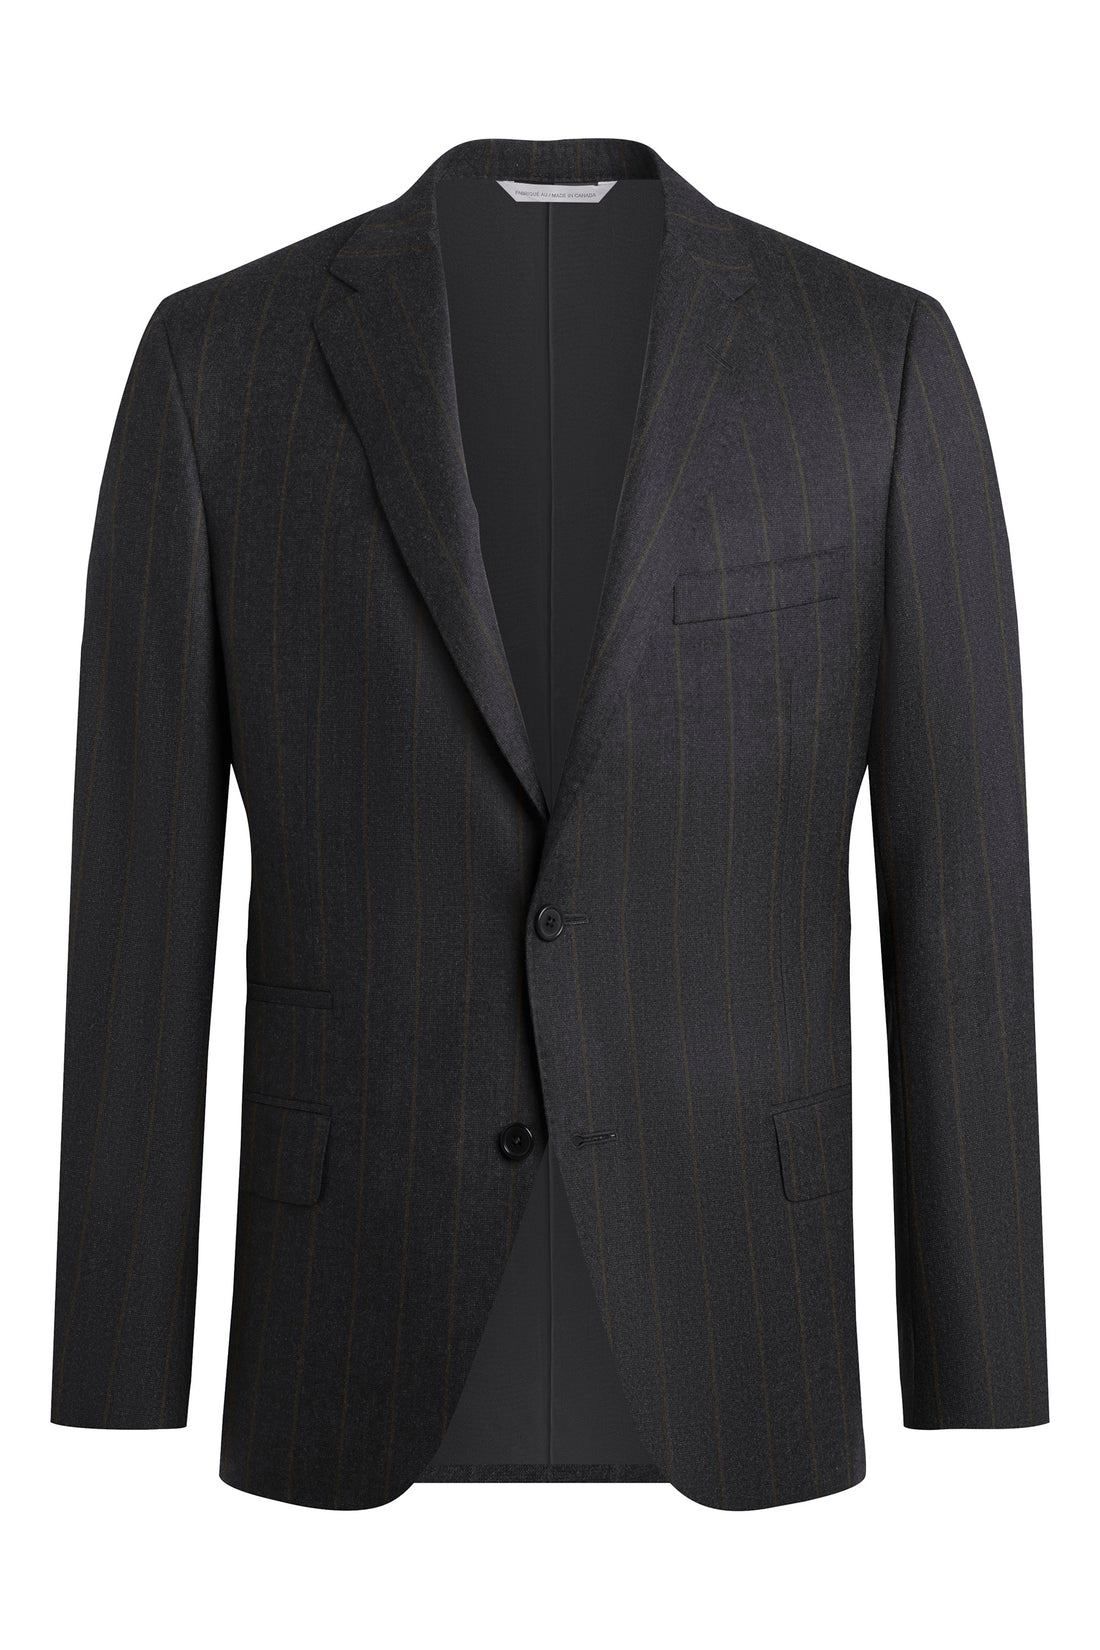 Charcoal Stripe Soft Loop Suit jacket